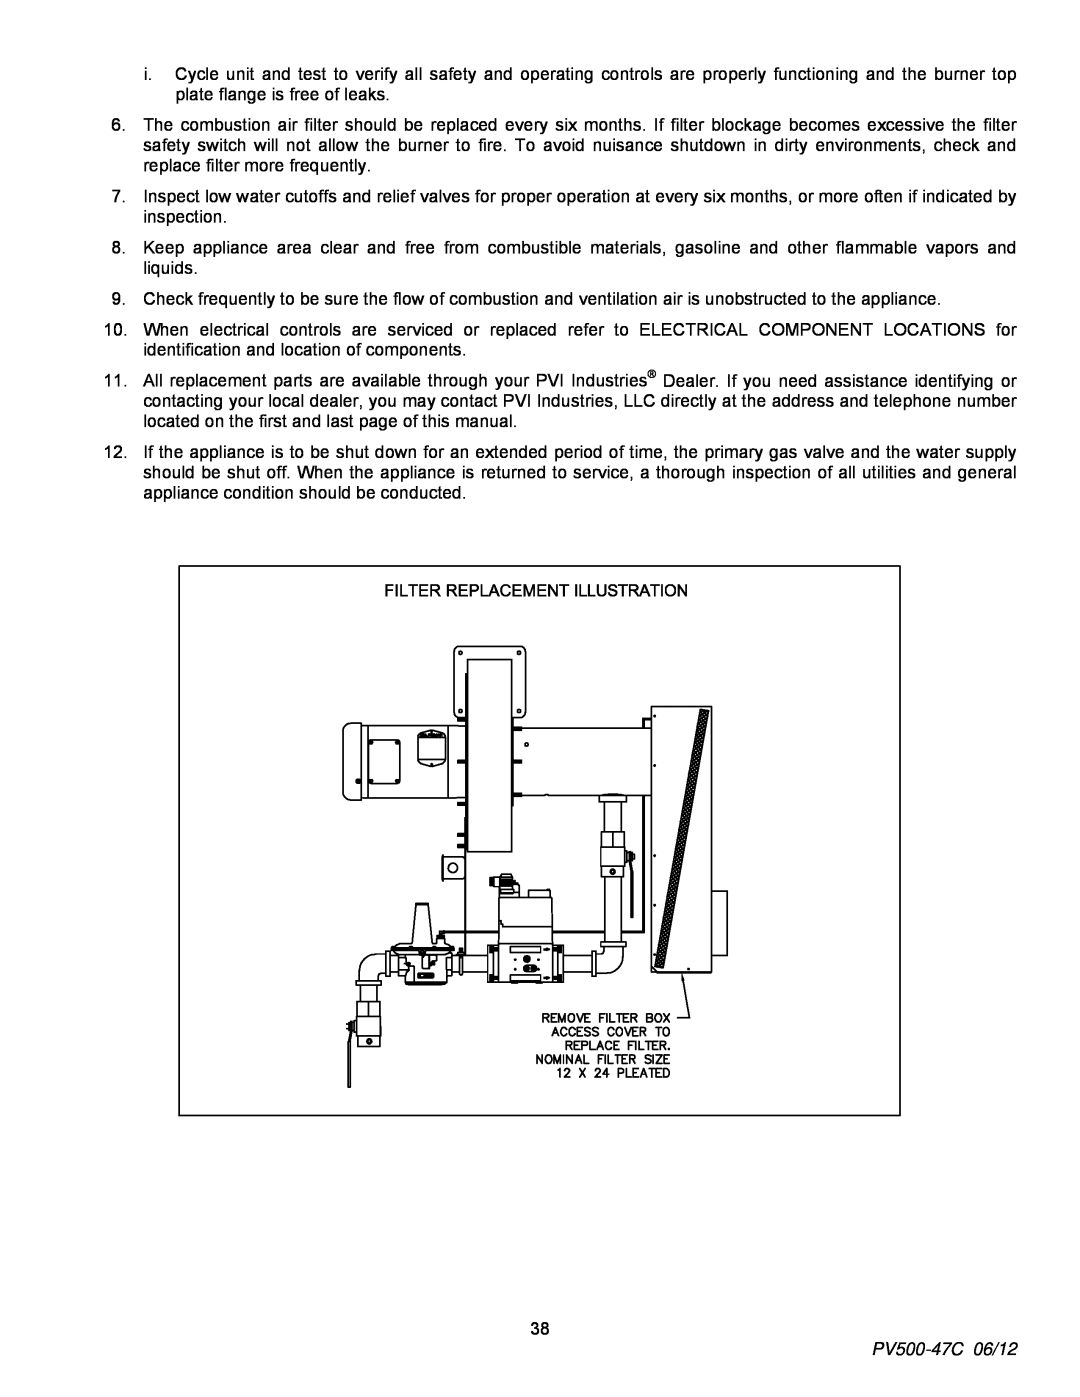 PVI Industries manual PV500-47C06/12 